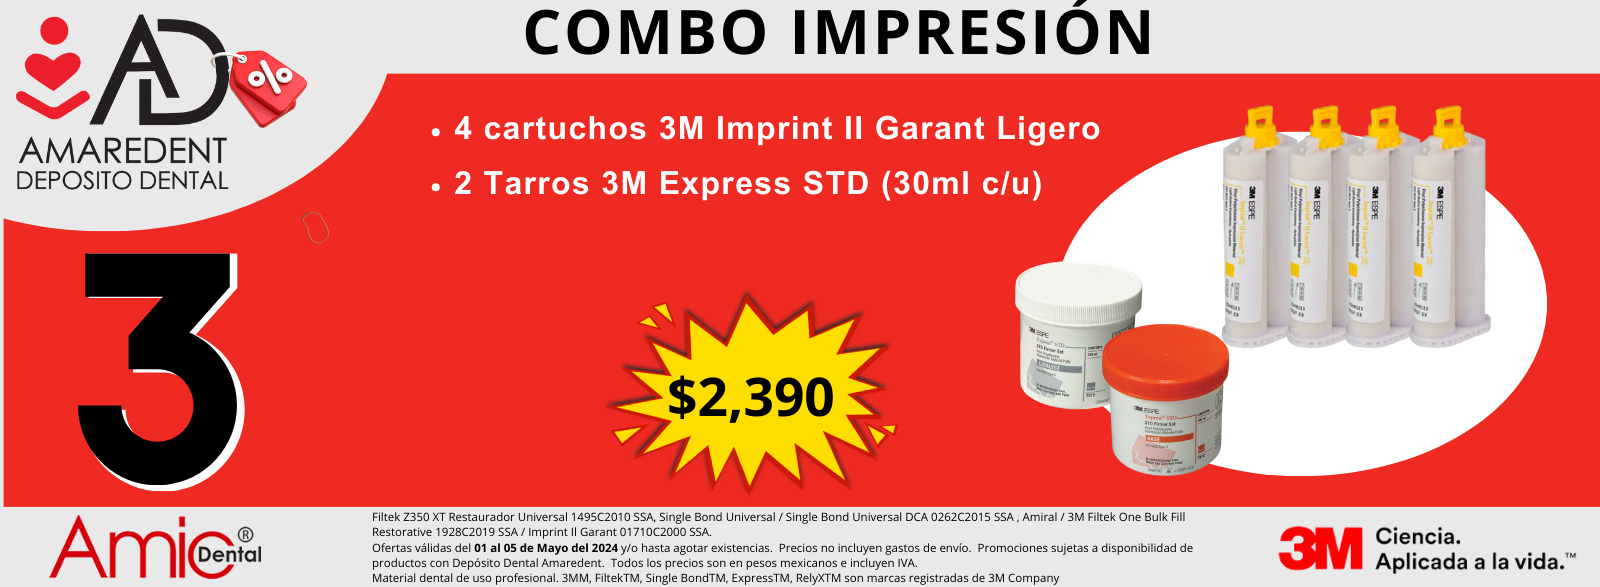 COMBO IMPRESIÓN 3M Imprint II Garant